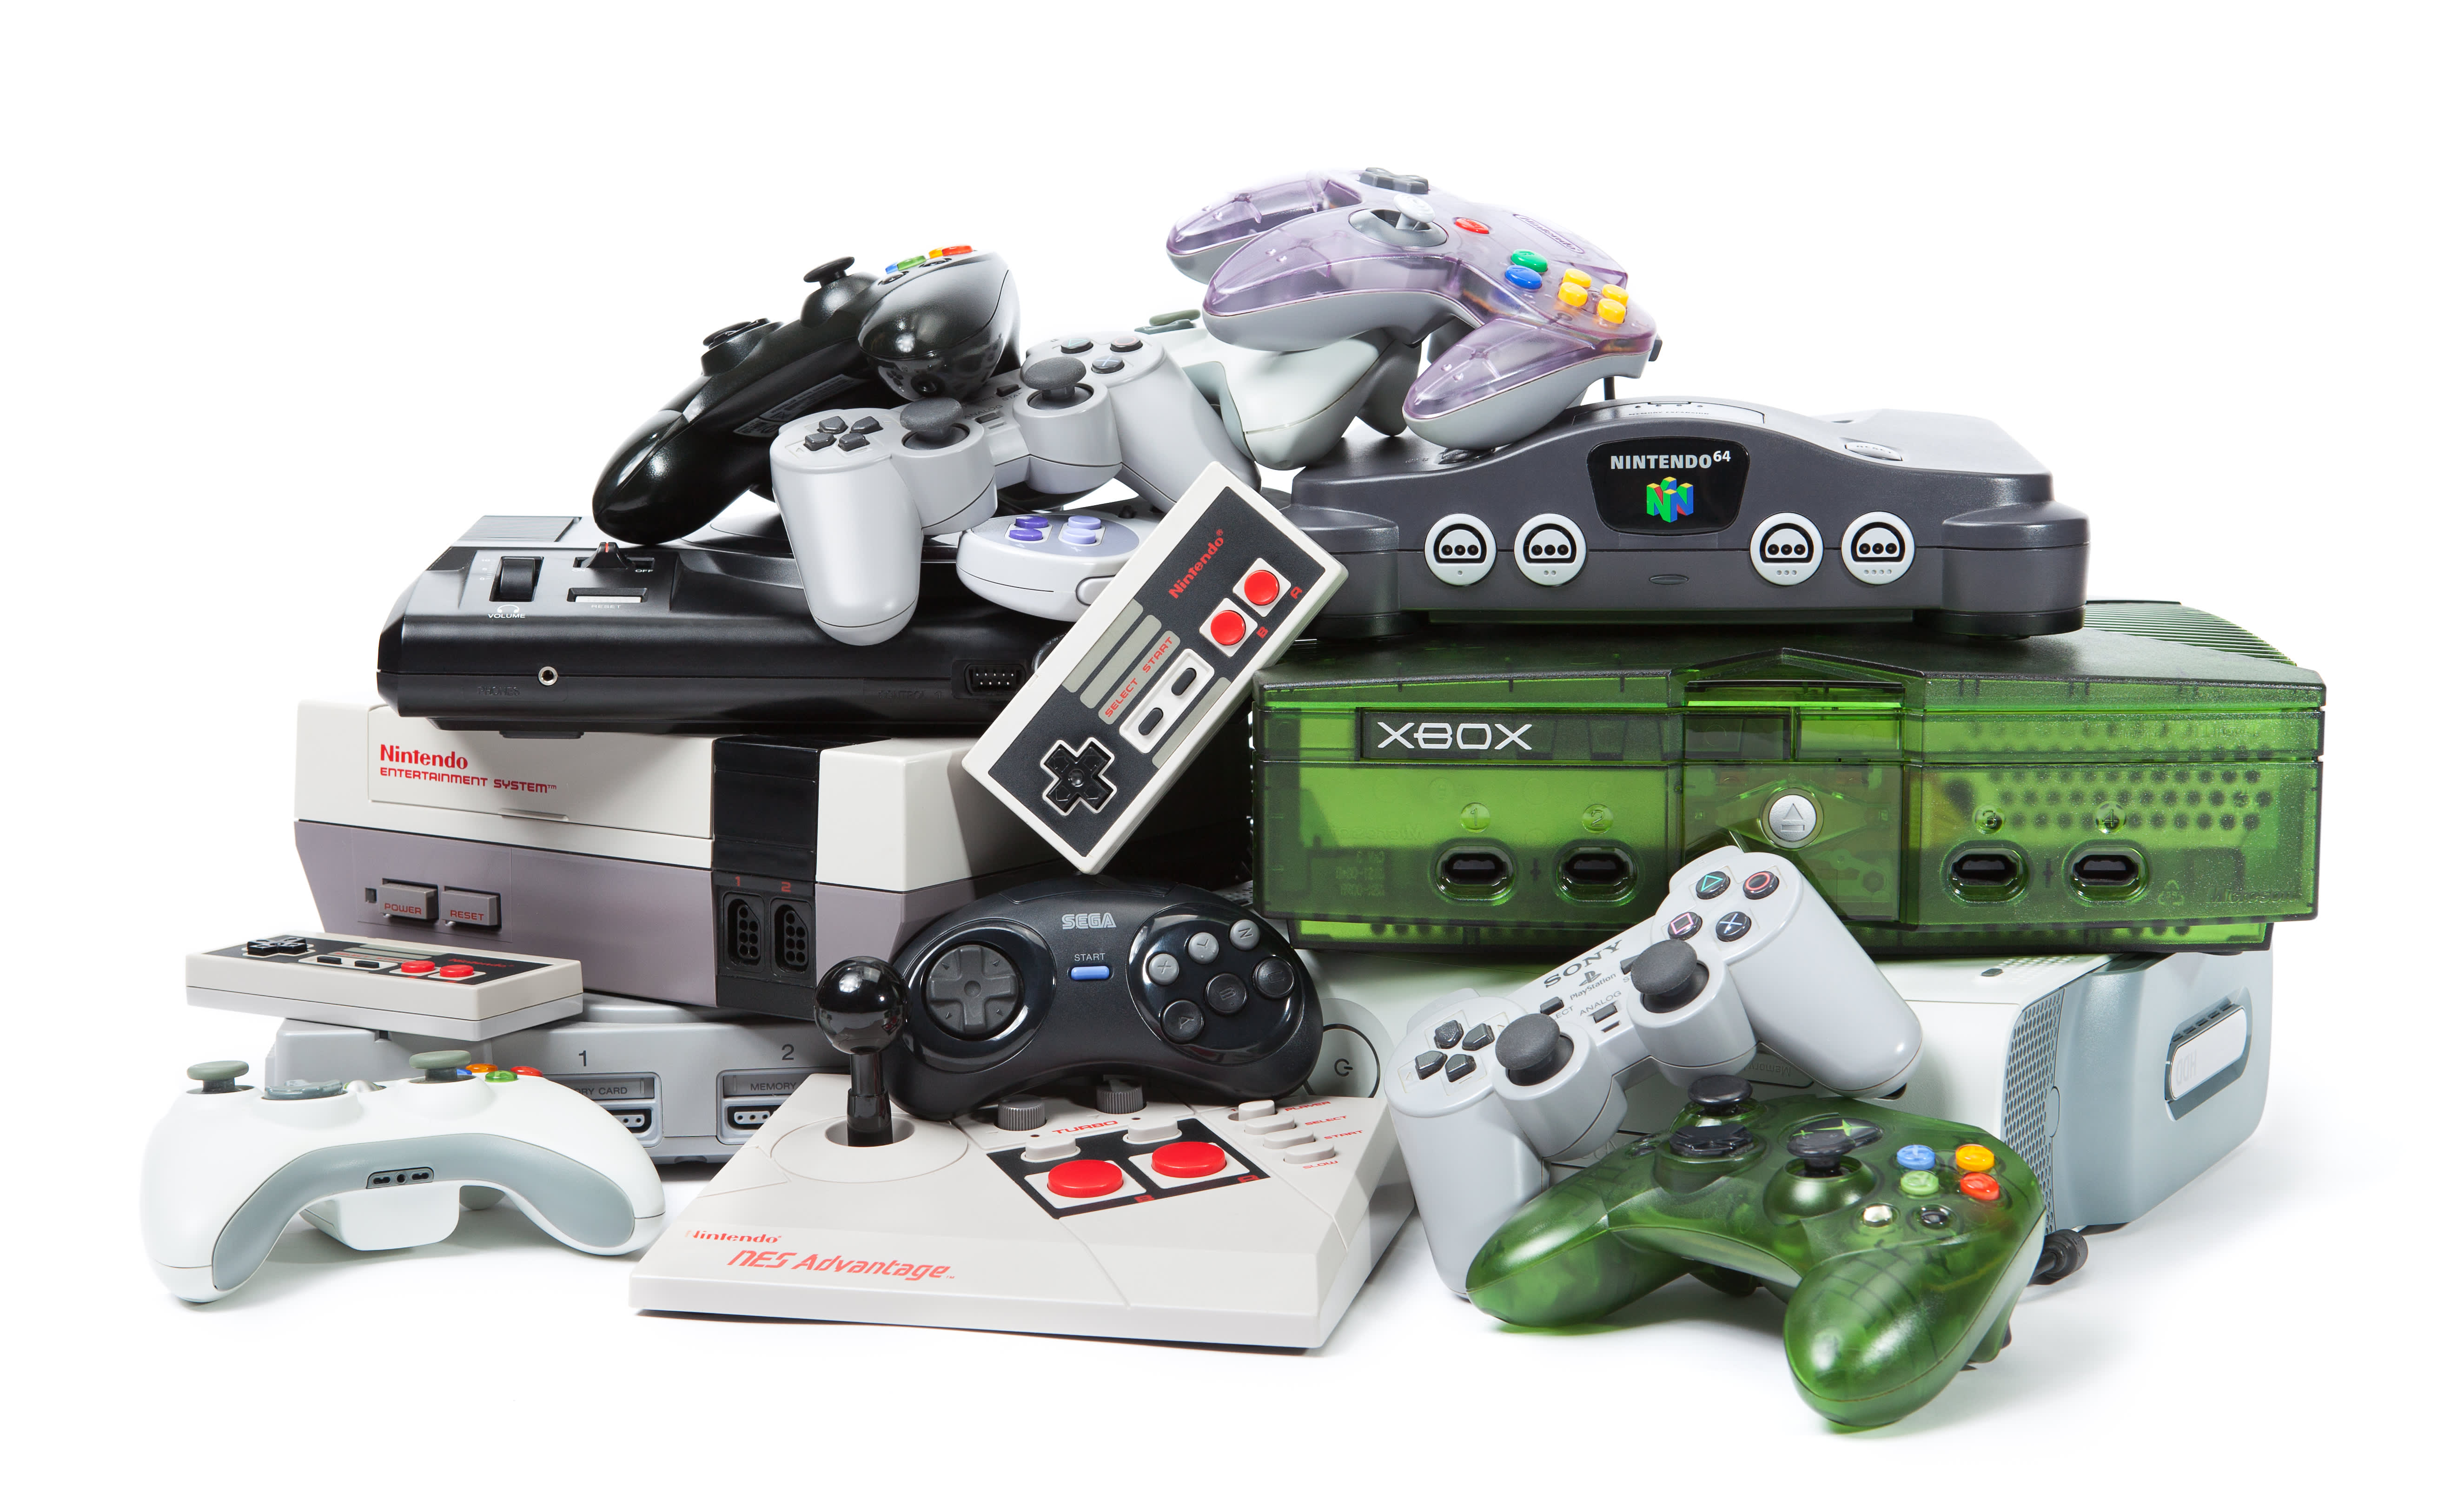 Game console is. Игровая приставка. Старые игровые приставки. Игровая приставка Nintendo. Игровые приставки плейстейшен иксбокс и Нинтендо.